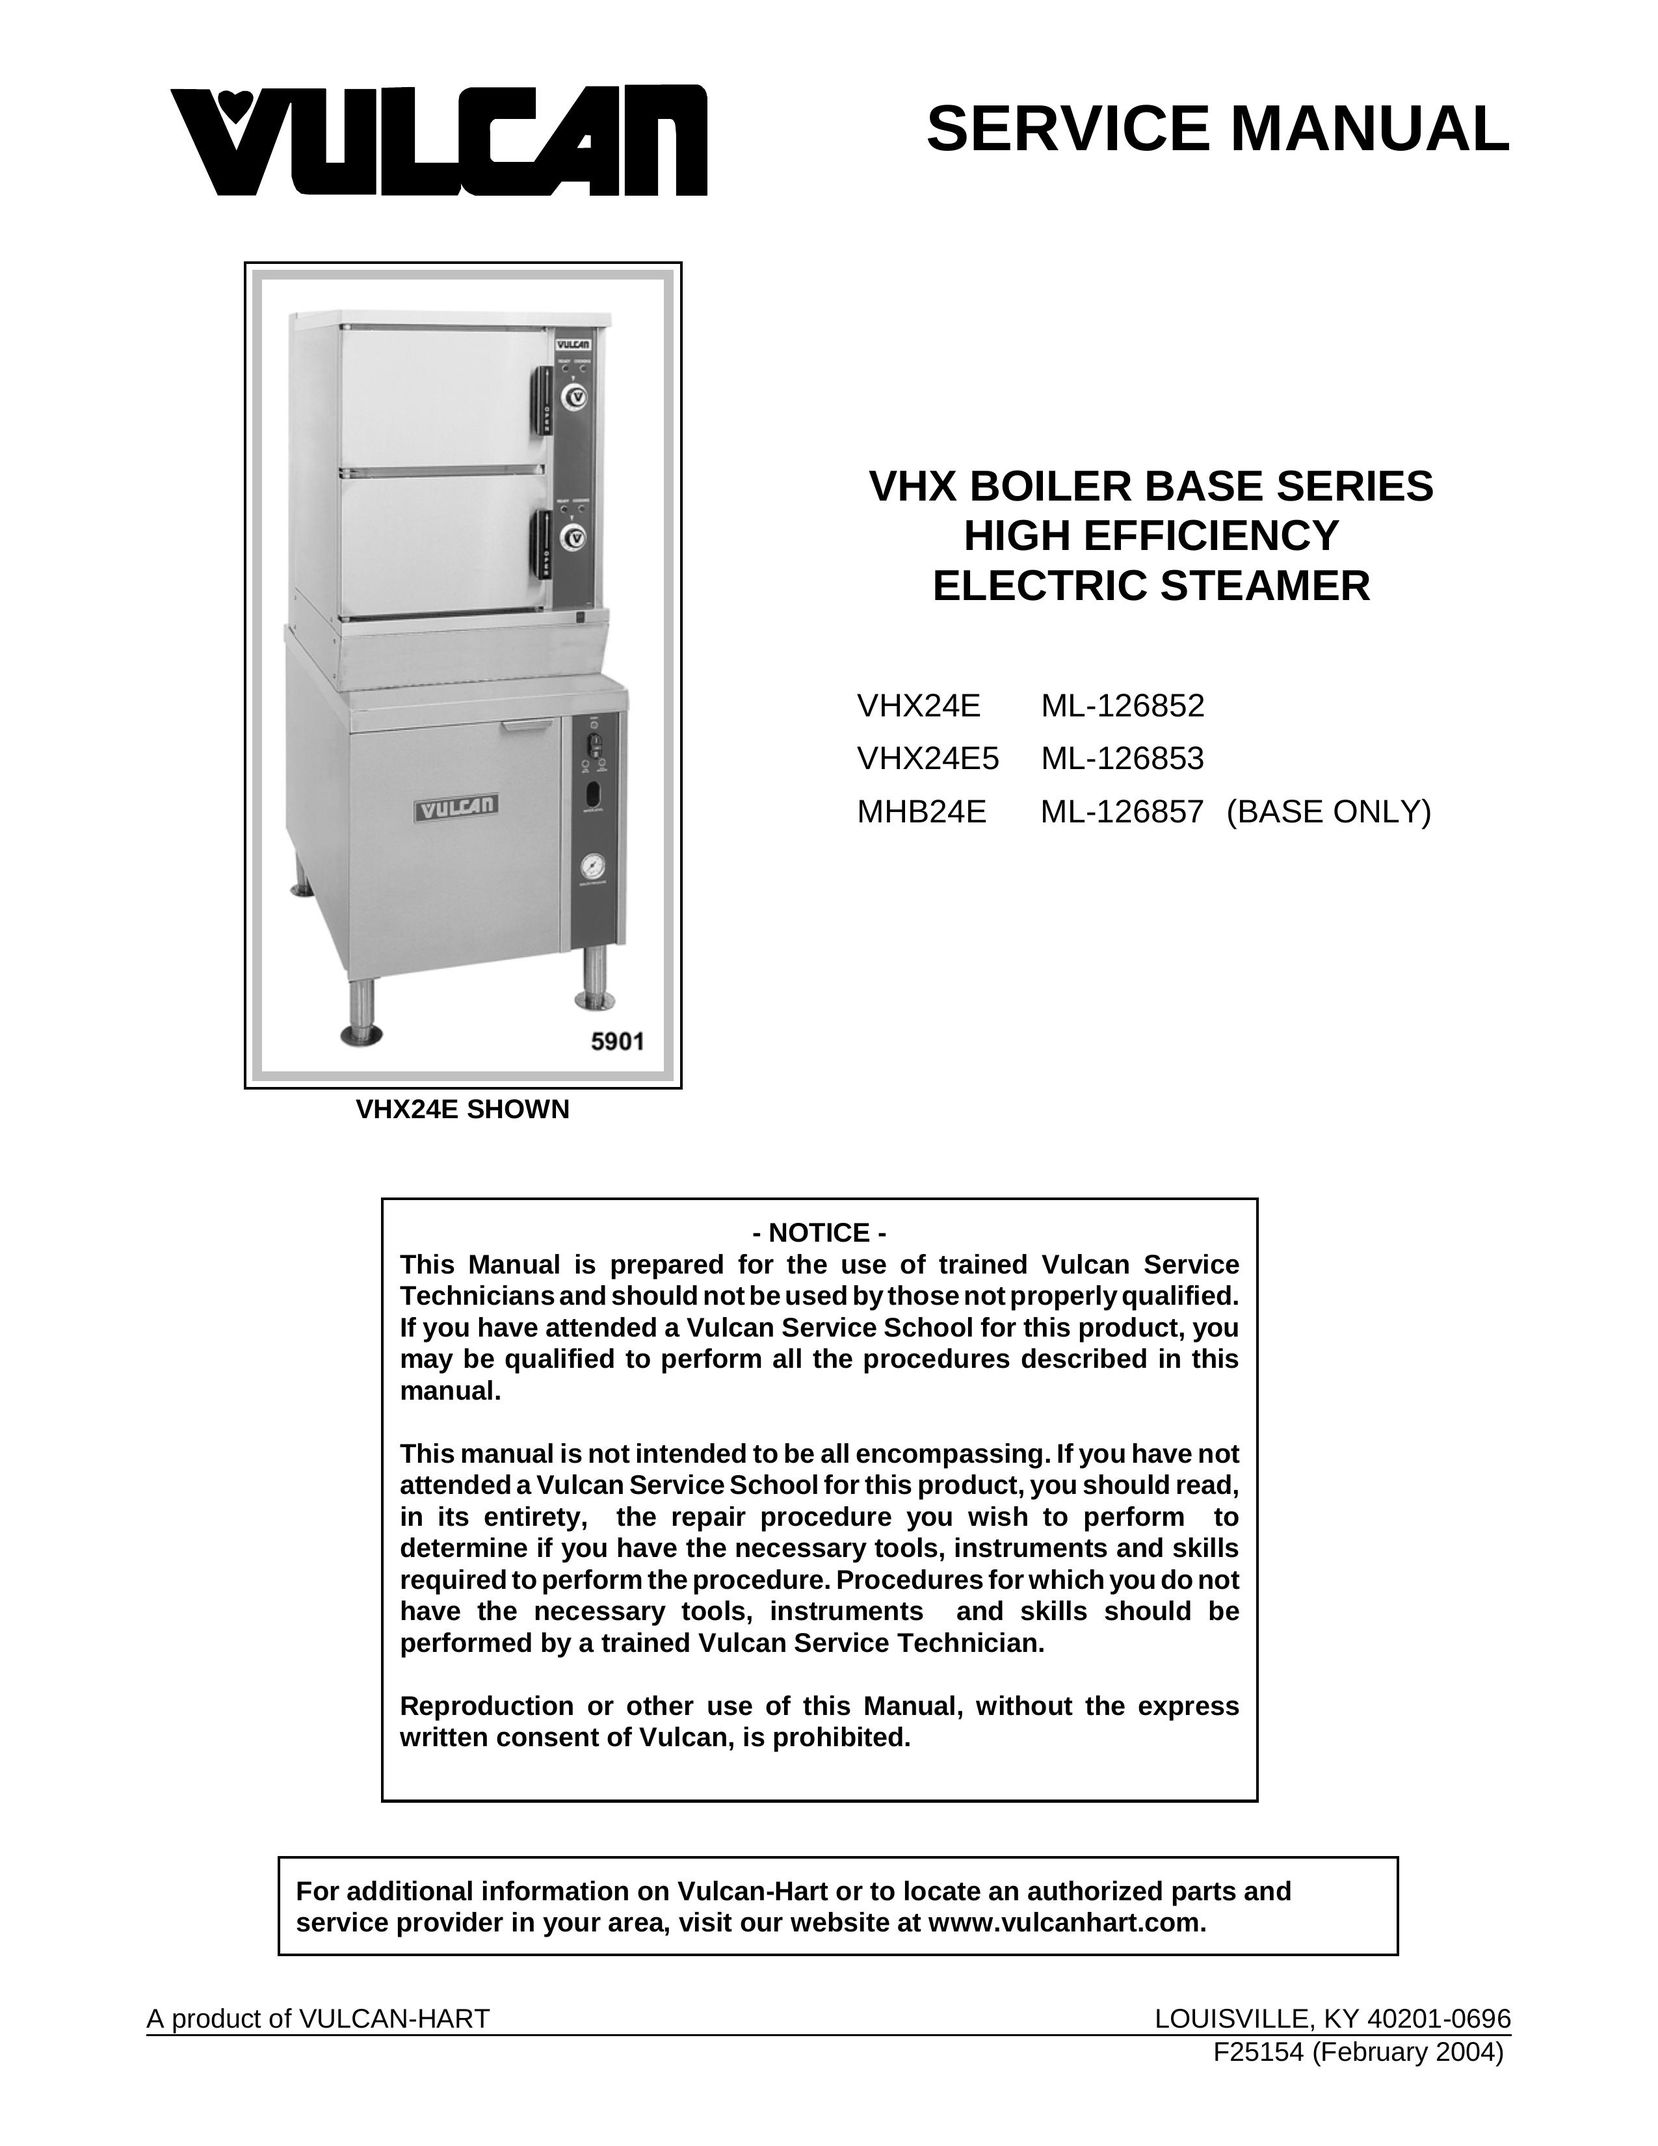 Vulcan-Hart ML-126853 Electric Steamer User Manual